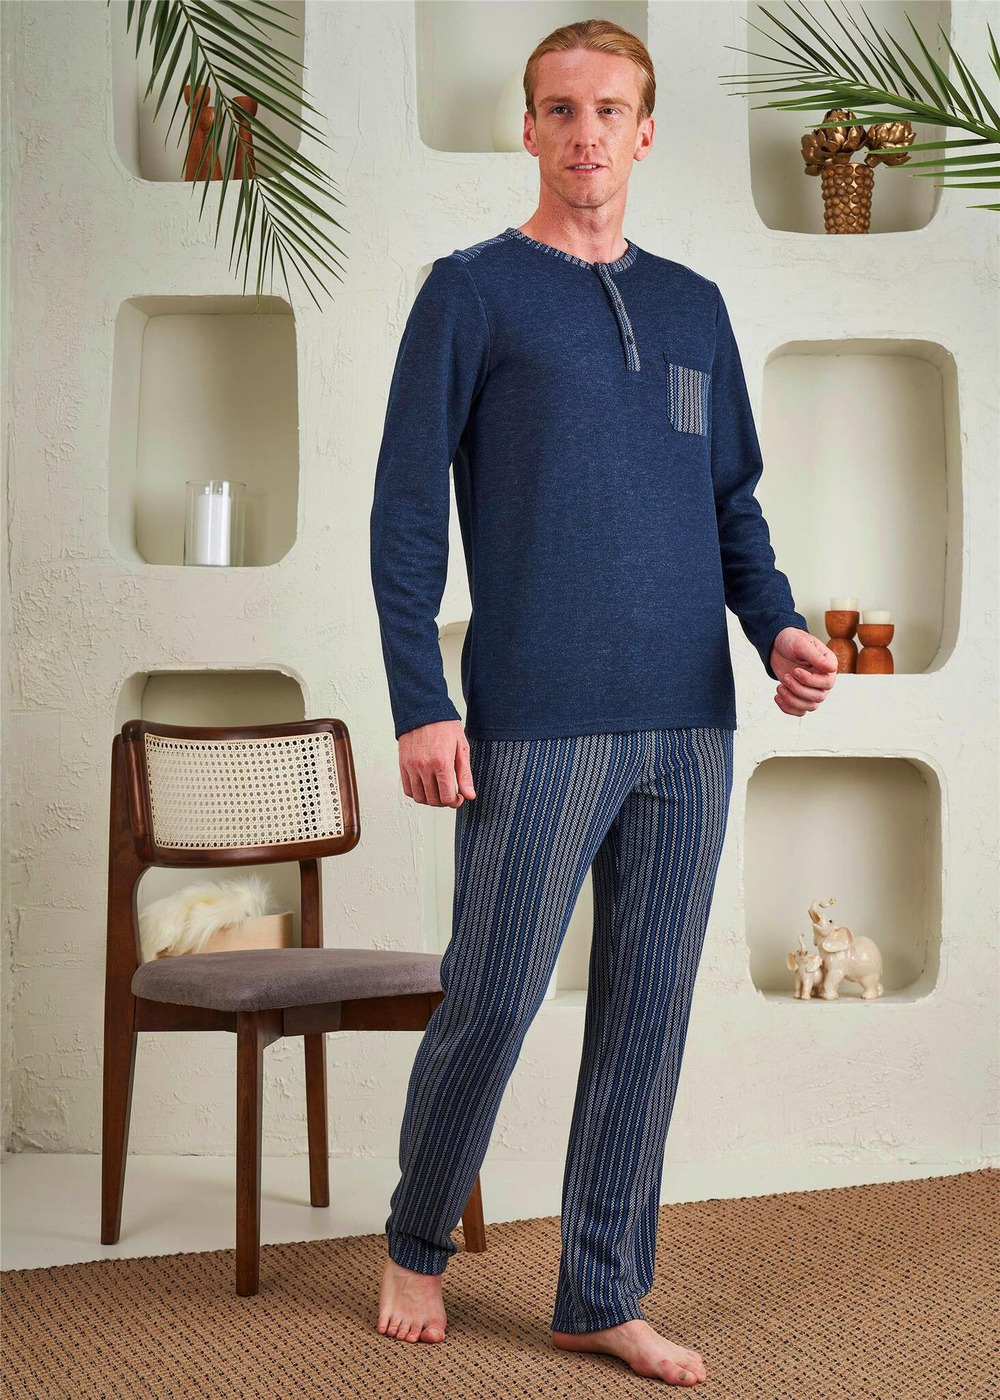 RELAX MODE - Пижама мужская пижама мужская со штанами - 10735